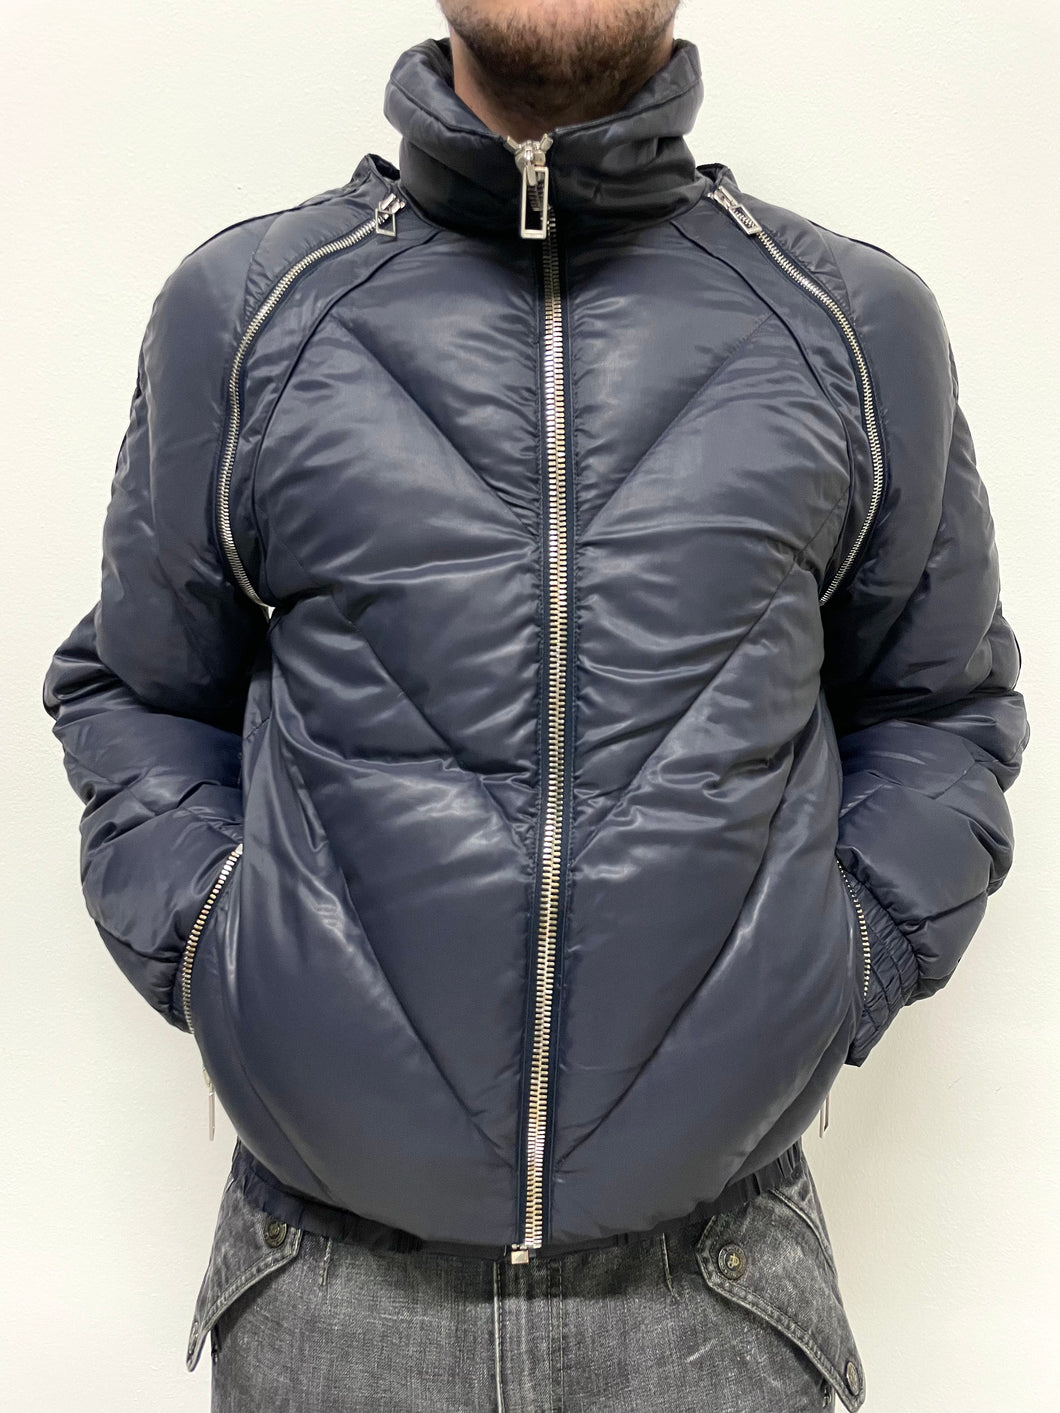 2008 Dior Homme modular puffer jacket